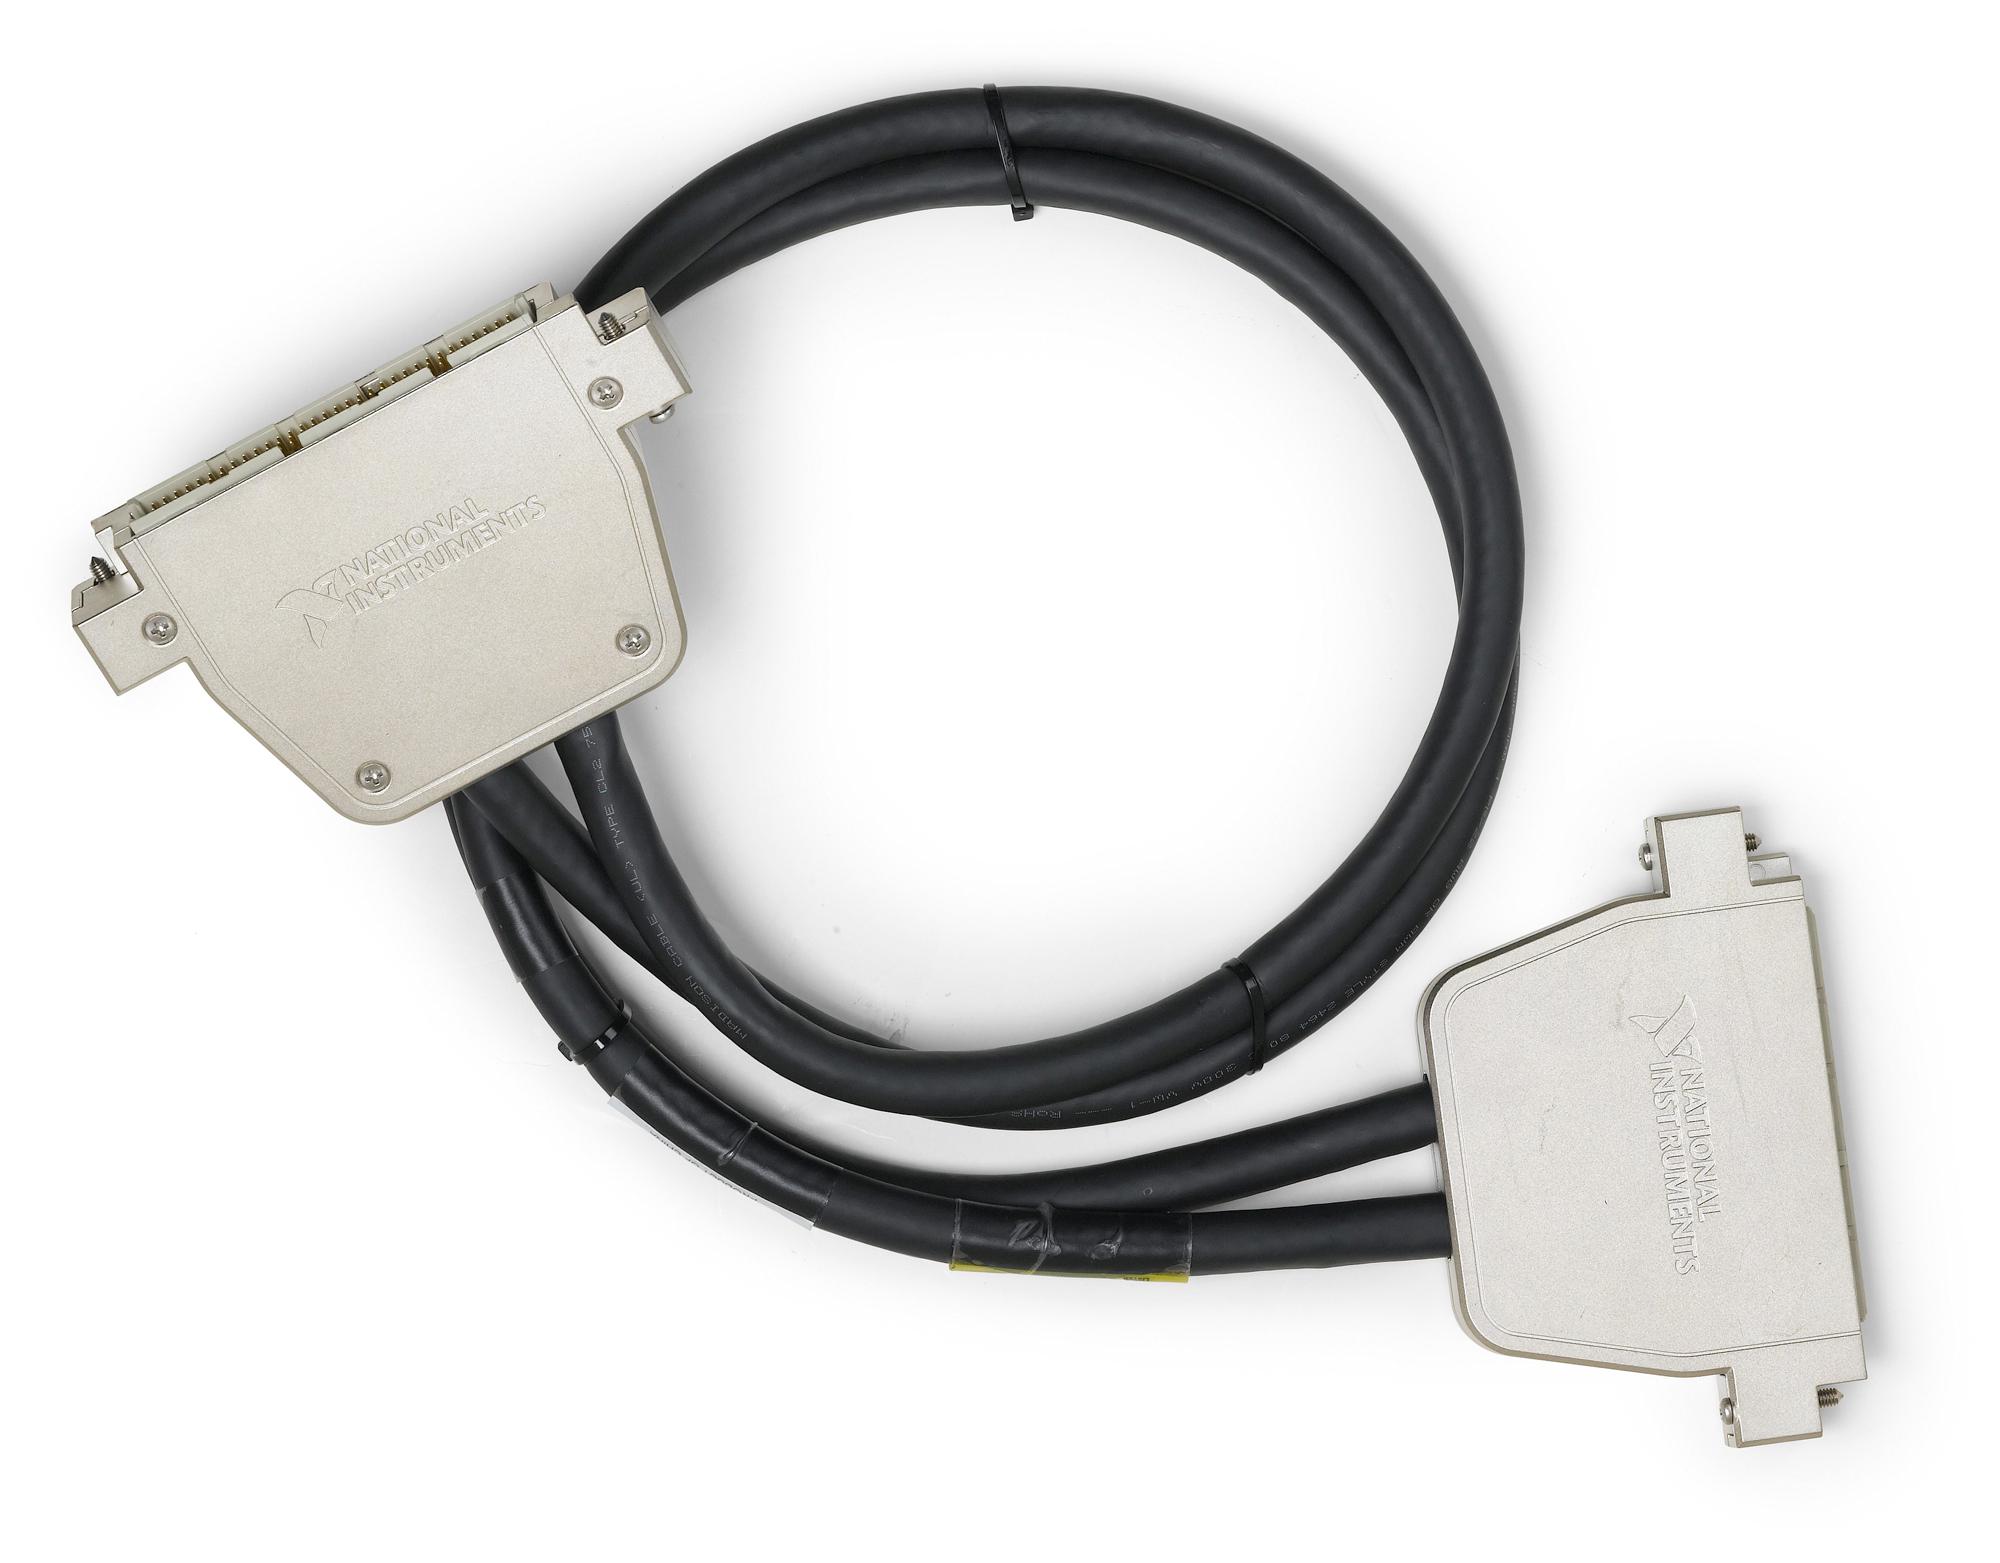 NI 157350-01 Sh96-96-2, Analog Cable, 1M